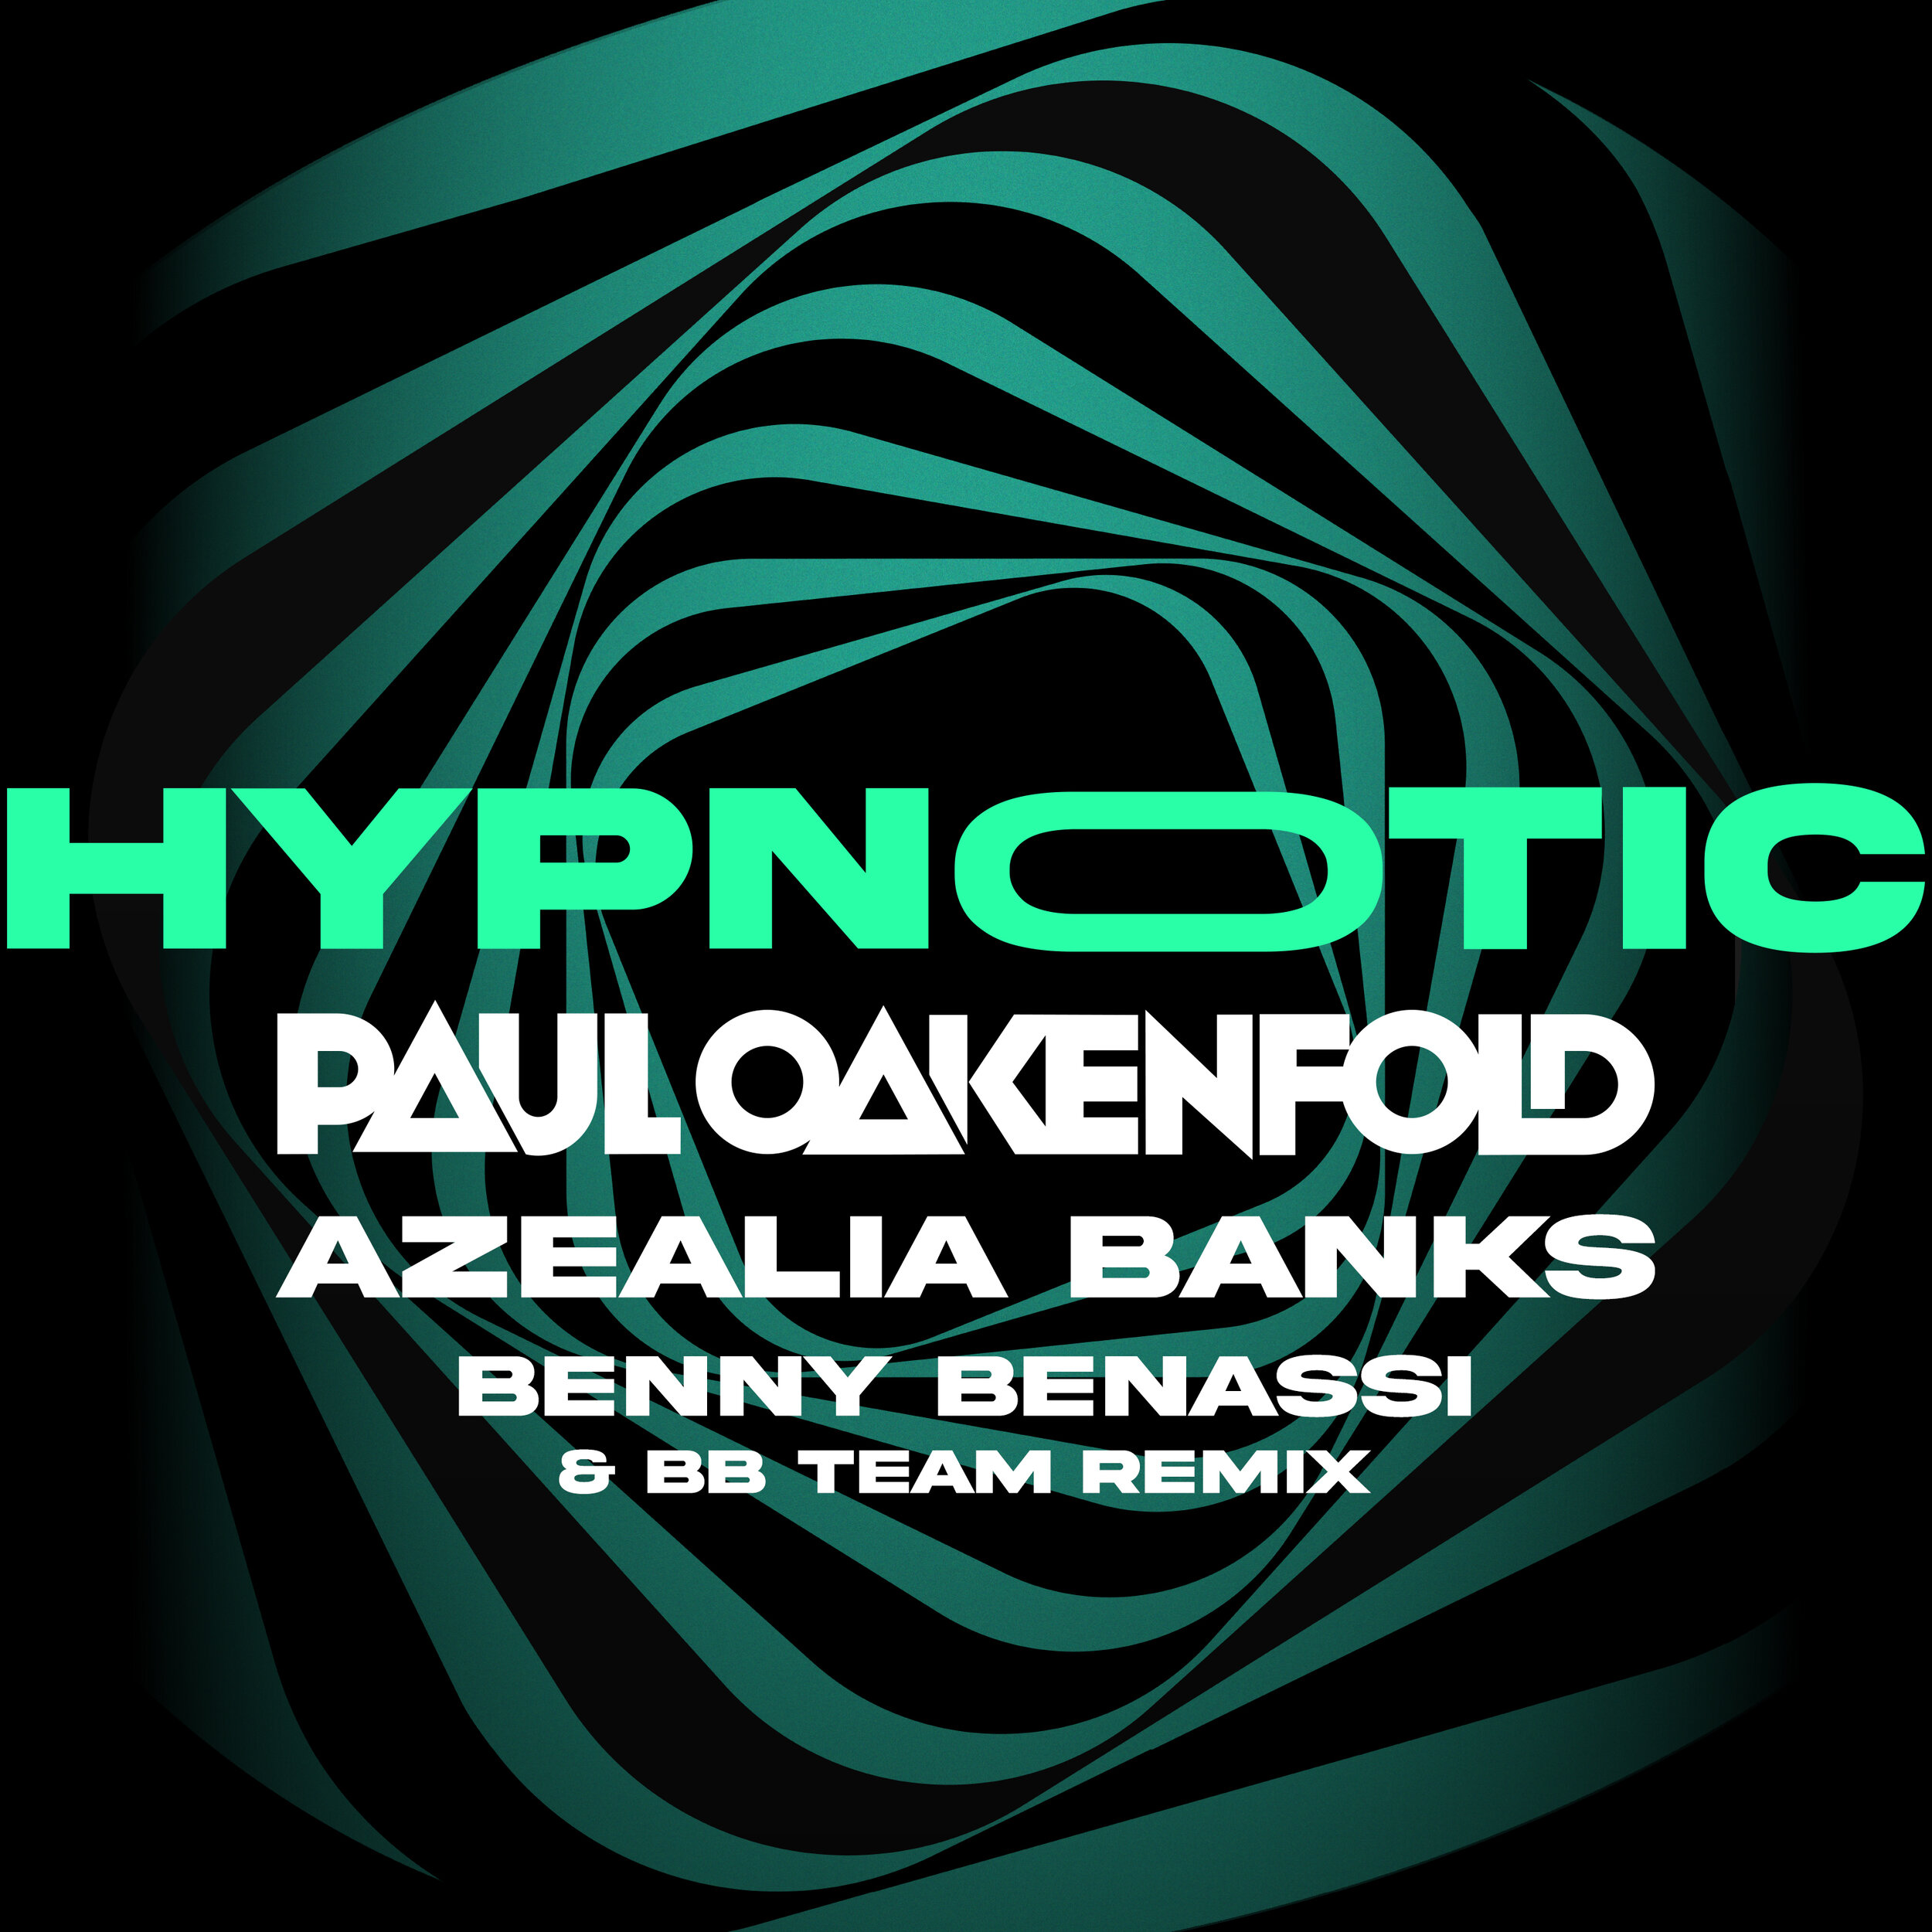 Hypnotic (Benny Benassi & BB Team Remix) - Paul Oakenfold x Azealia Banks - Artwork.jpg